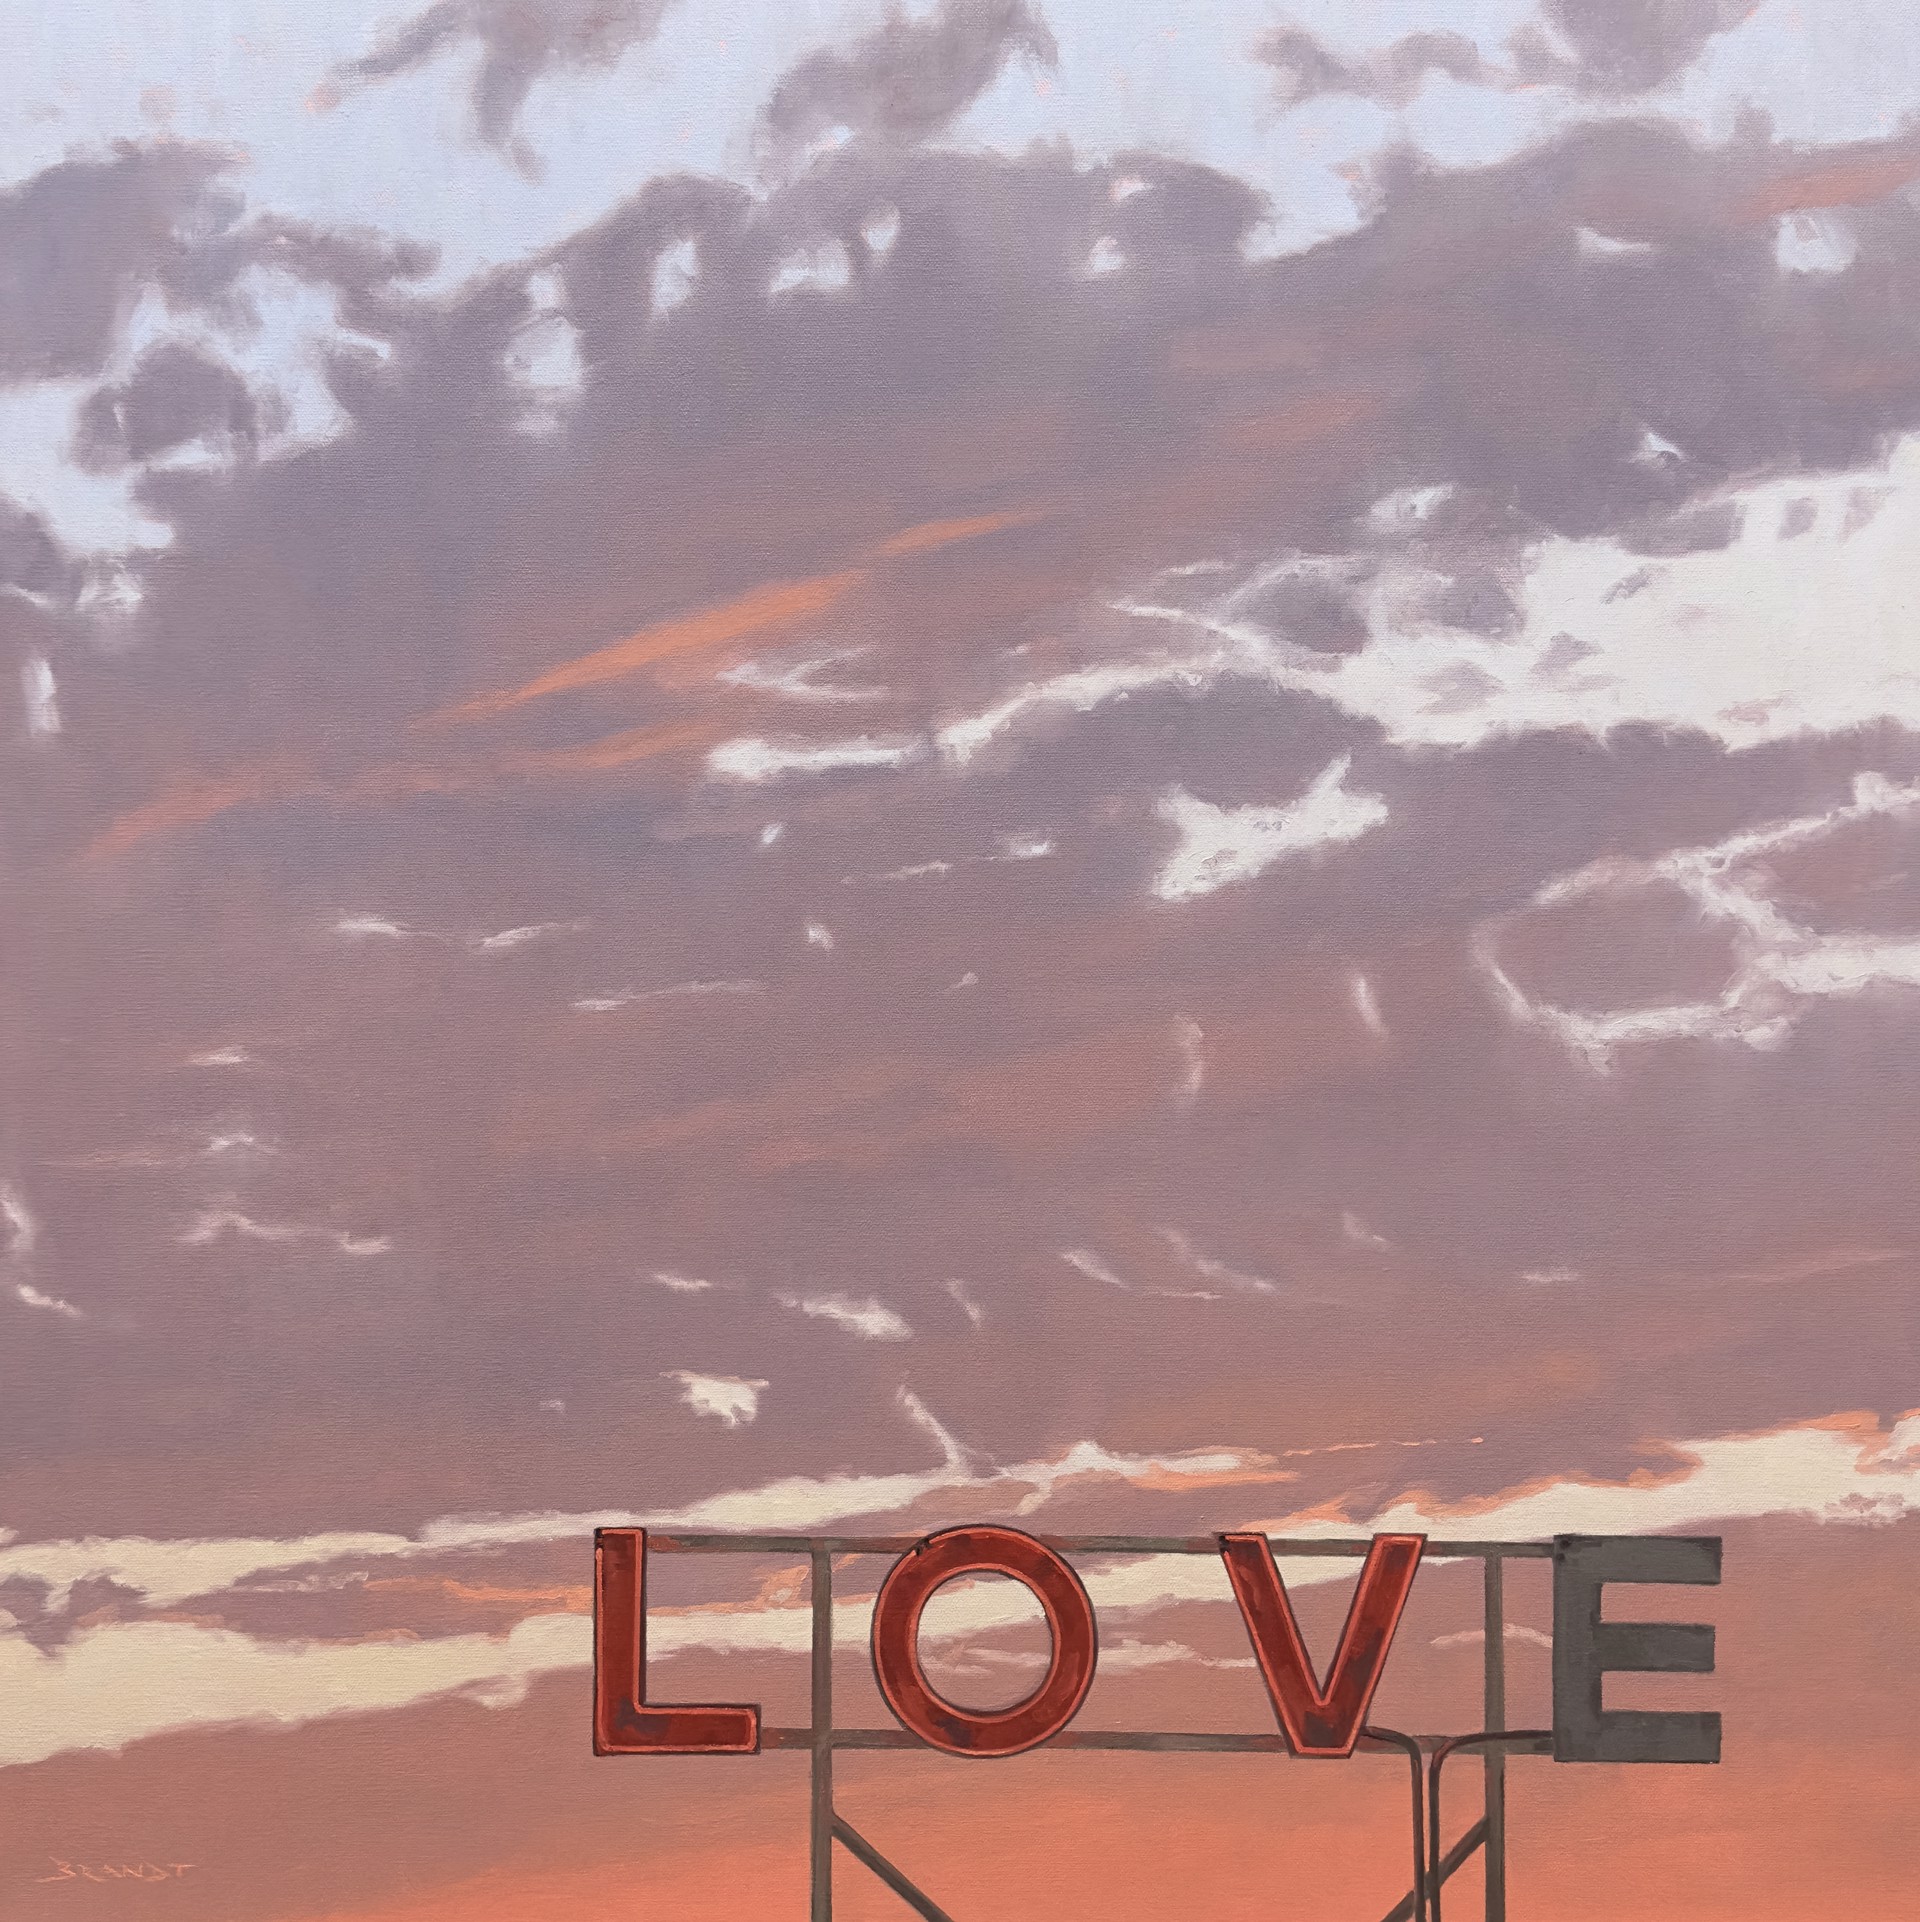 Higher Love by Brandt Berntson